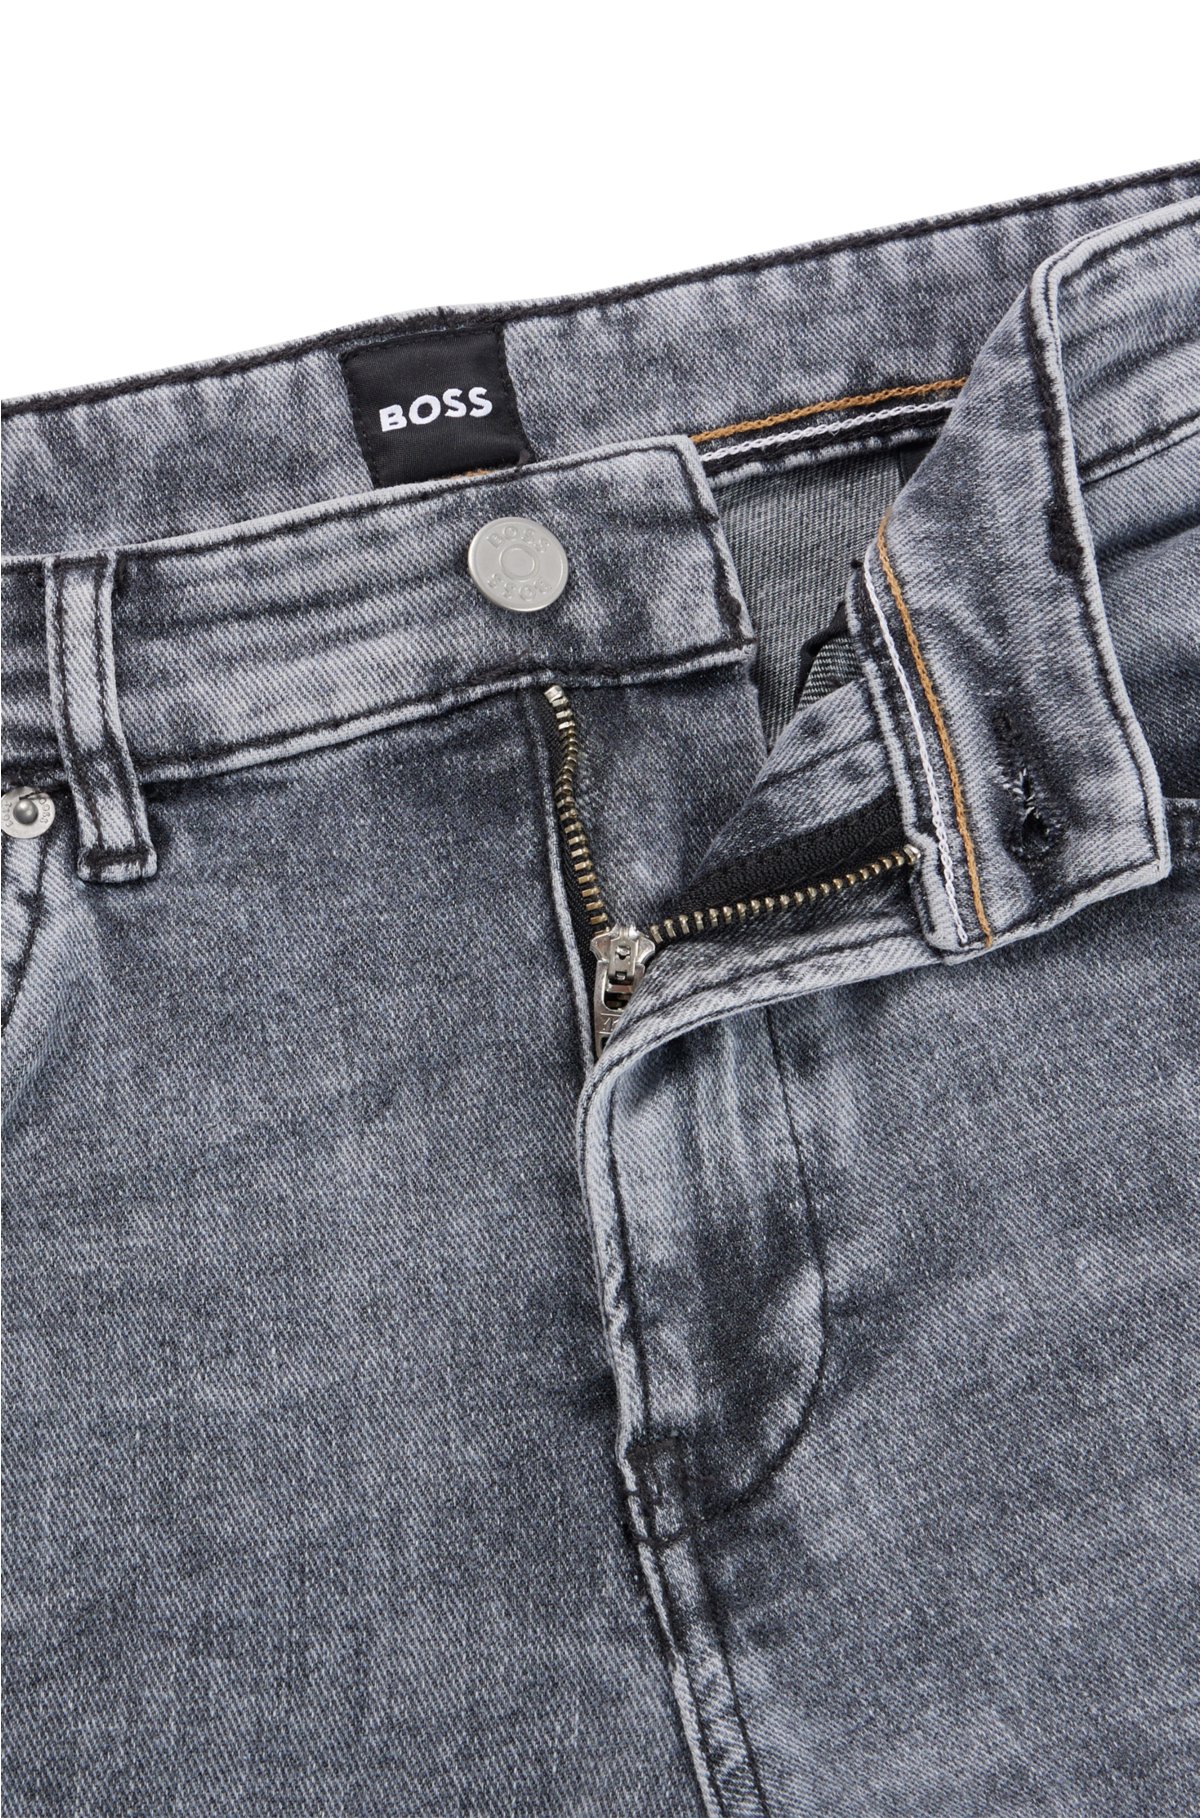 BOSS - Slim-fit jeans in Italian gray denim stonewashed stretch